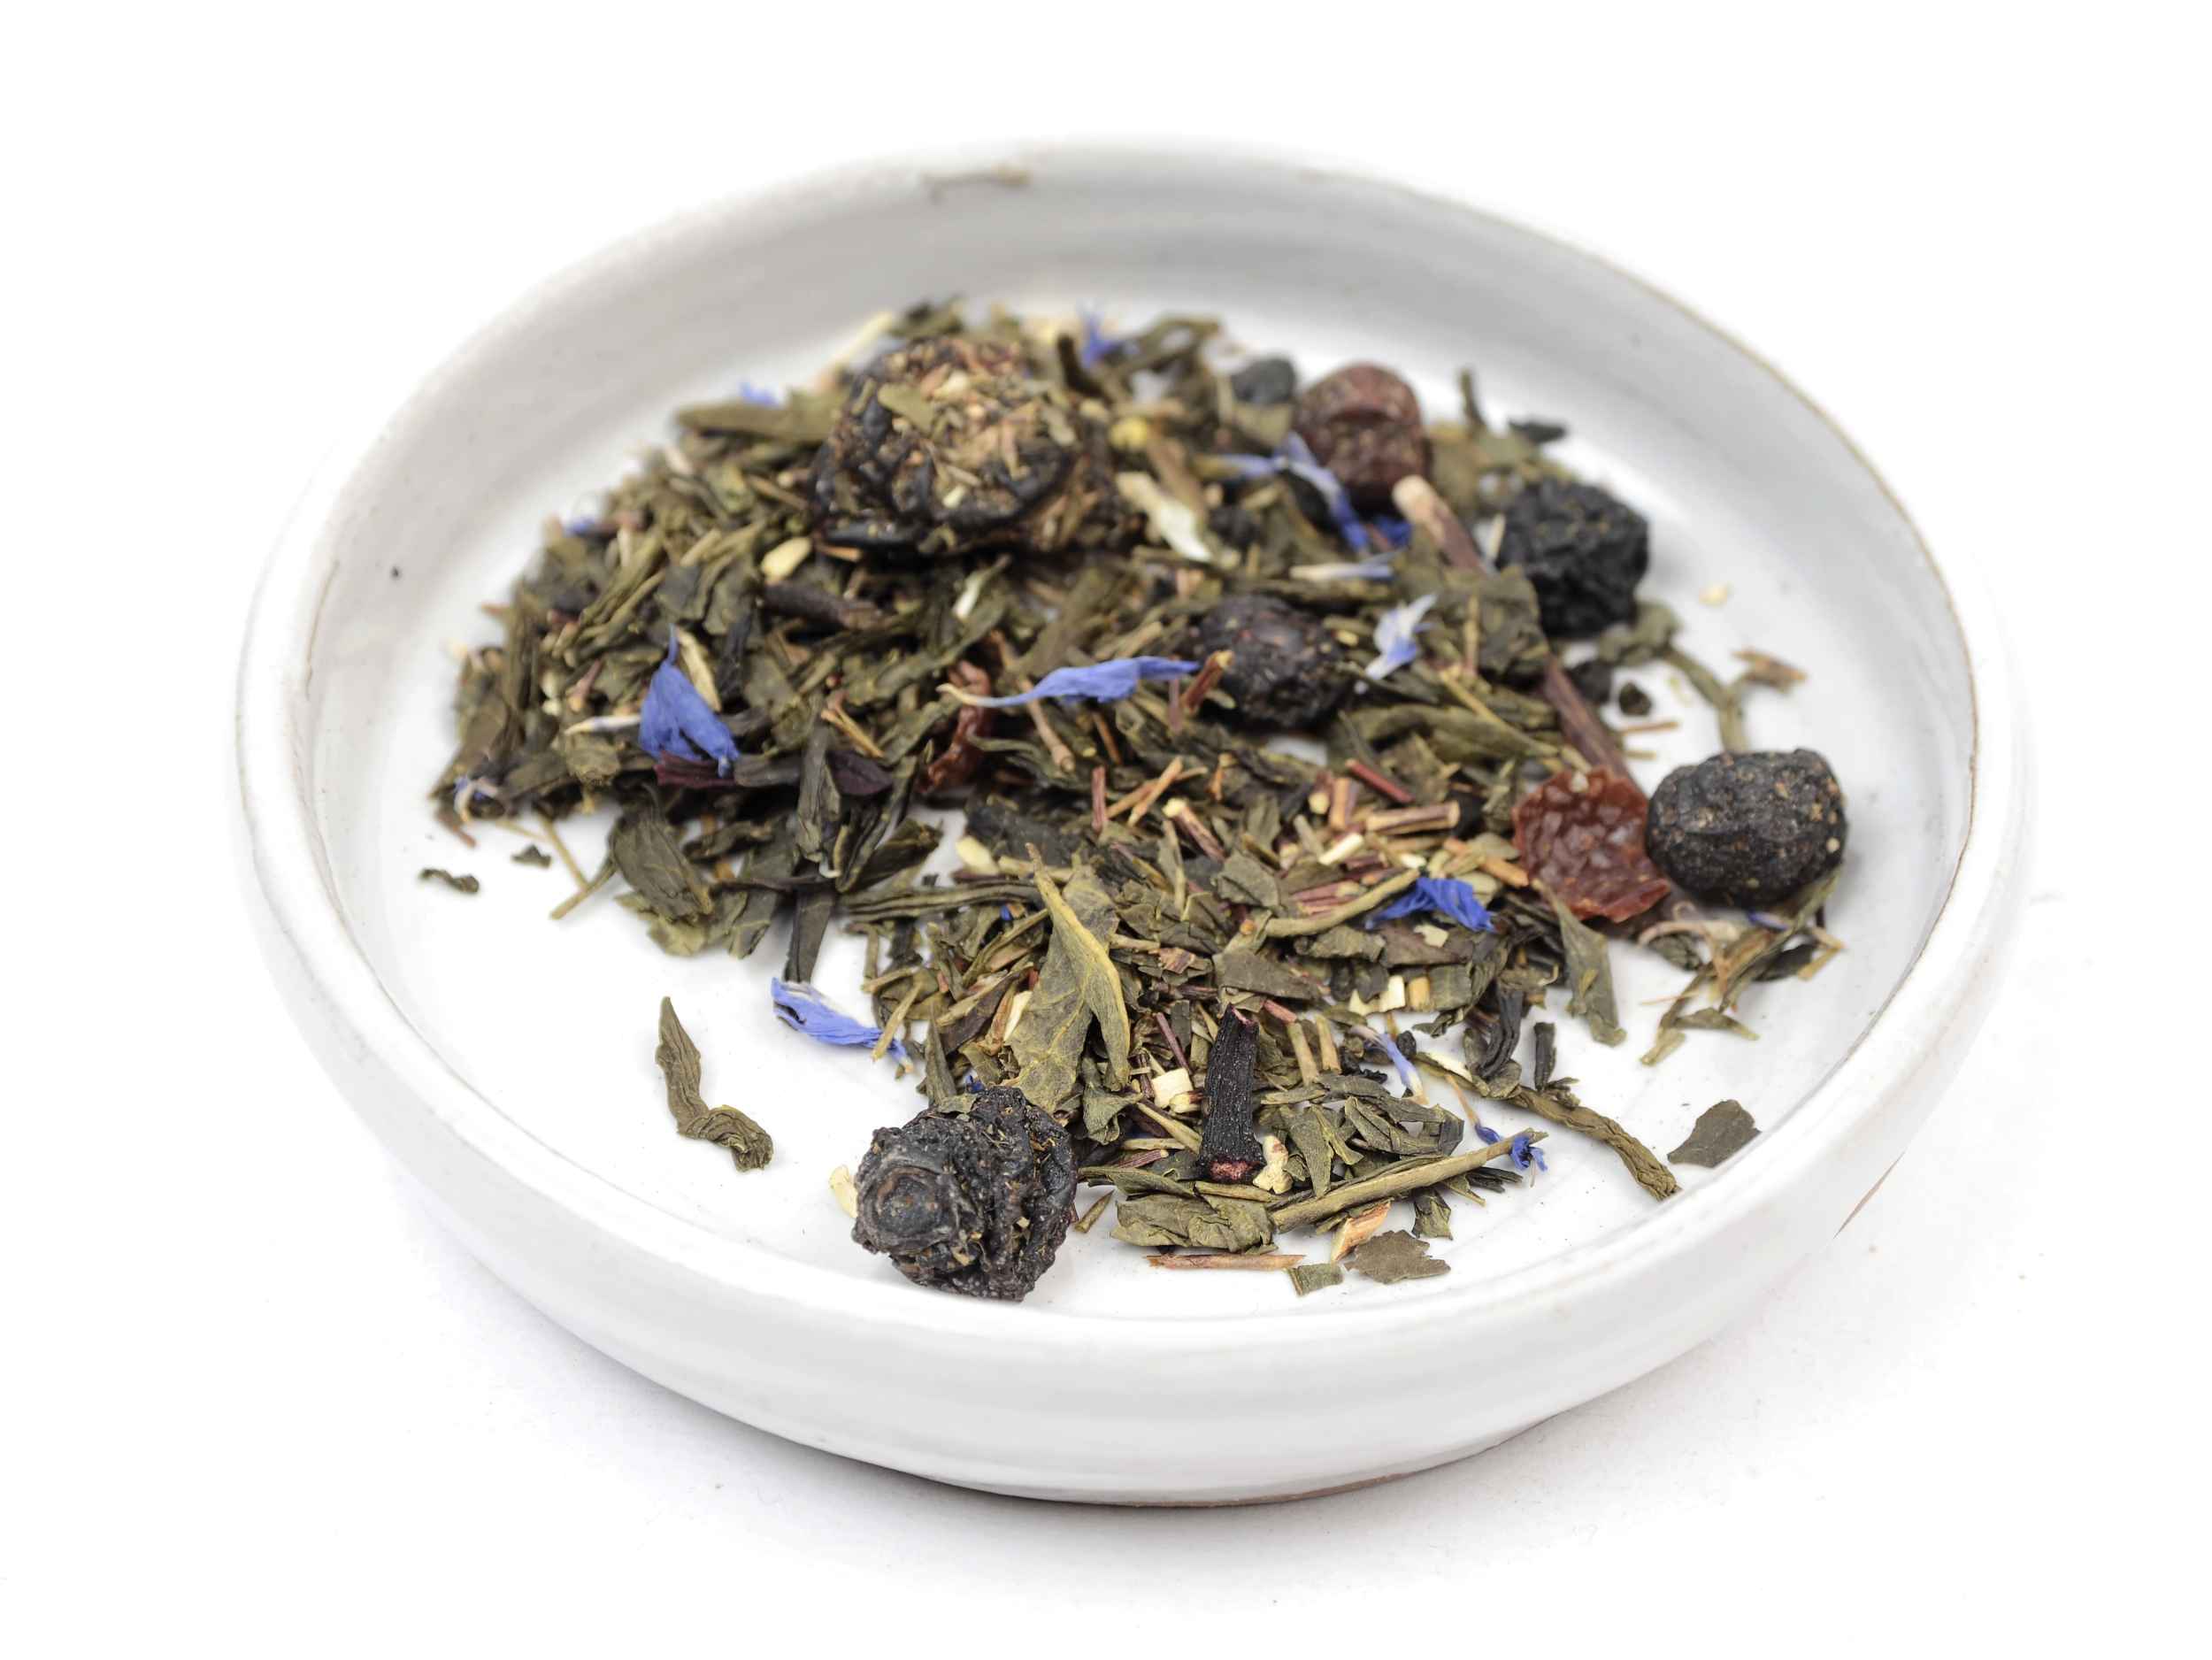 Blueberry Hibiscus Green Tea